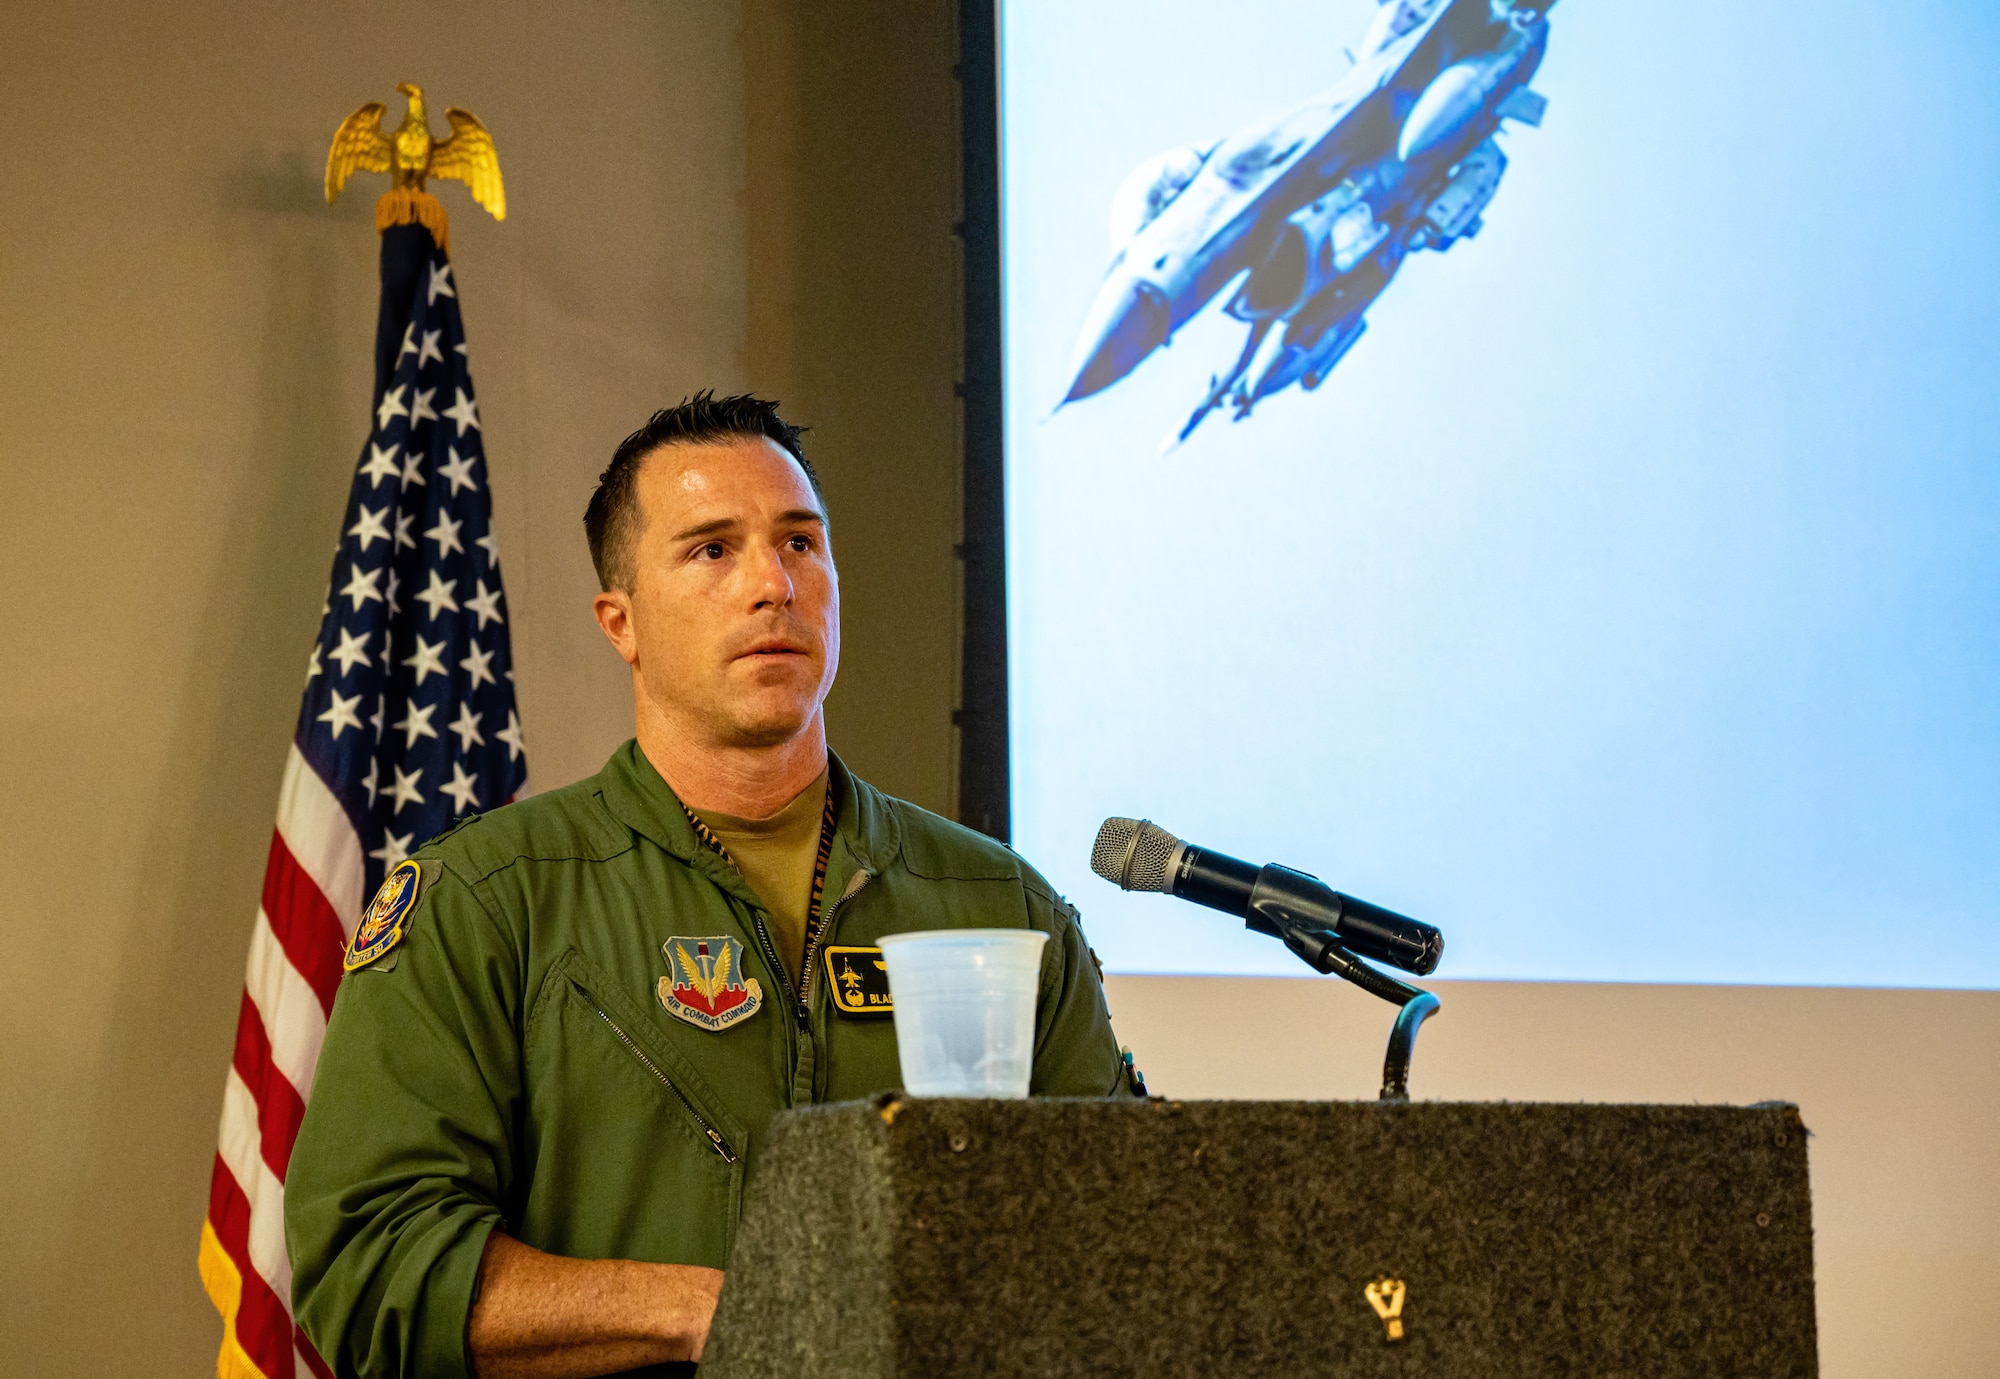 A photo of an Airman at a podium.